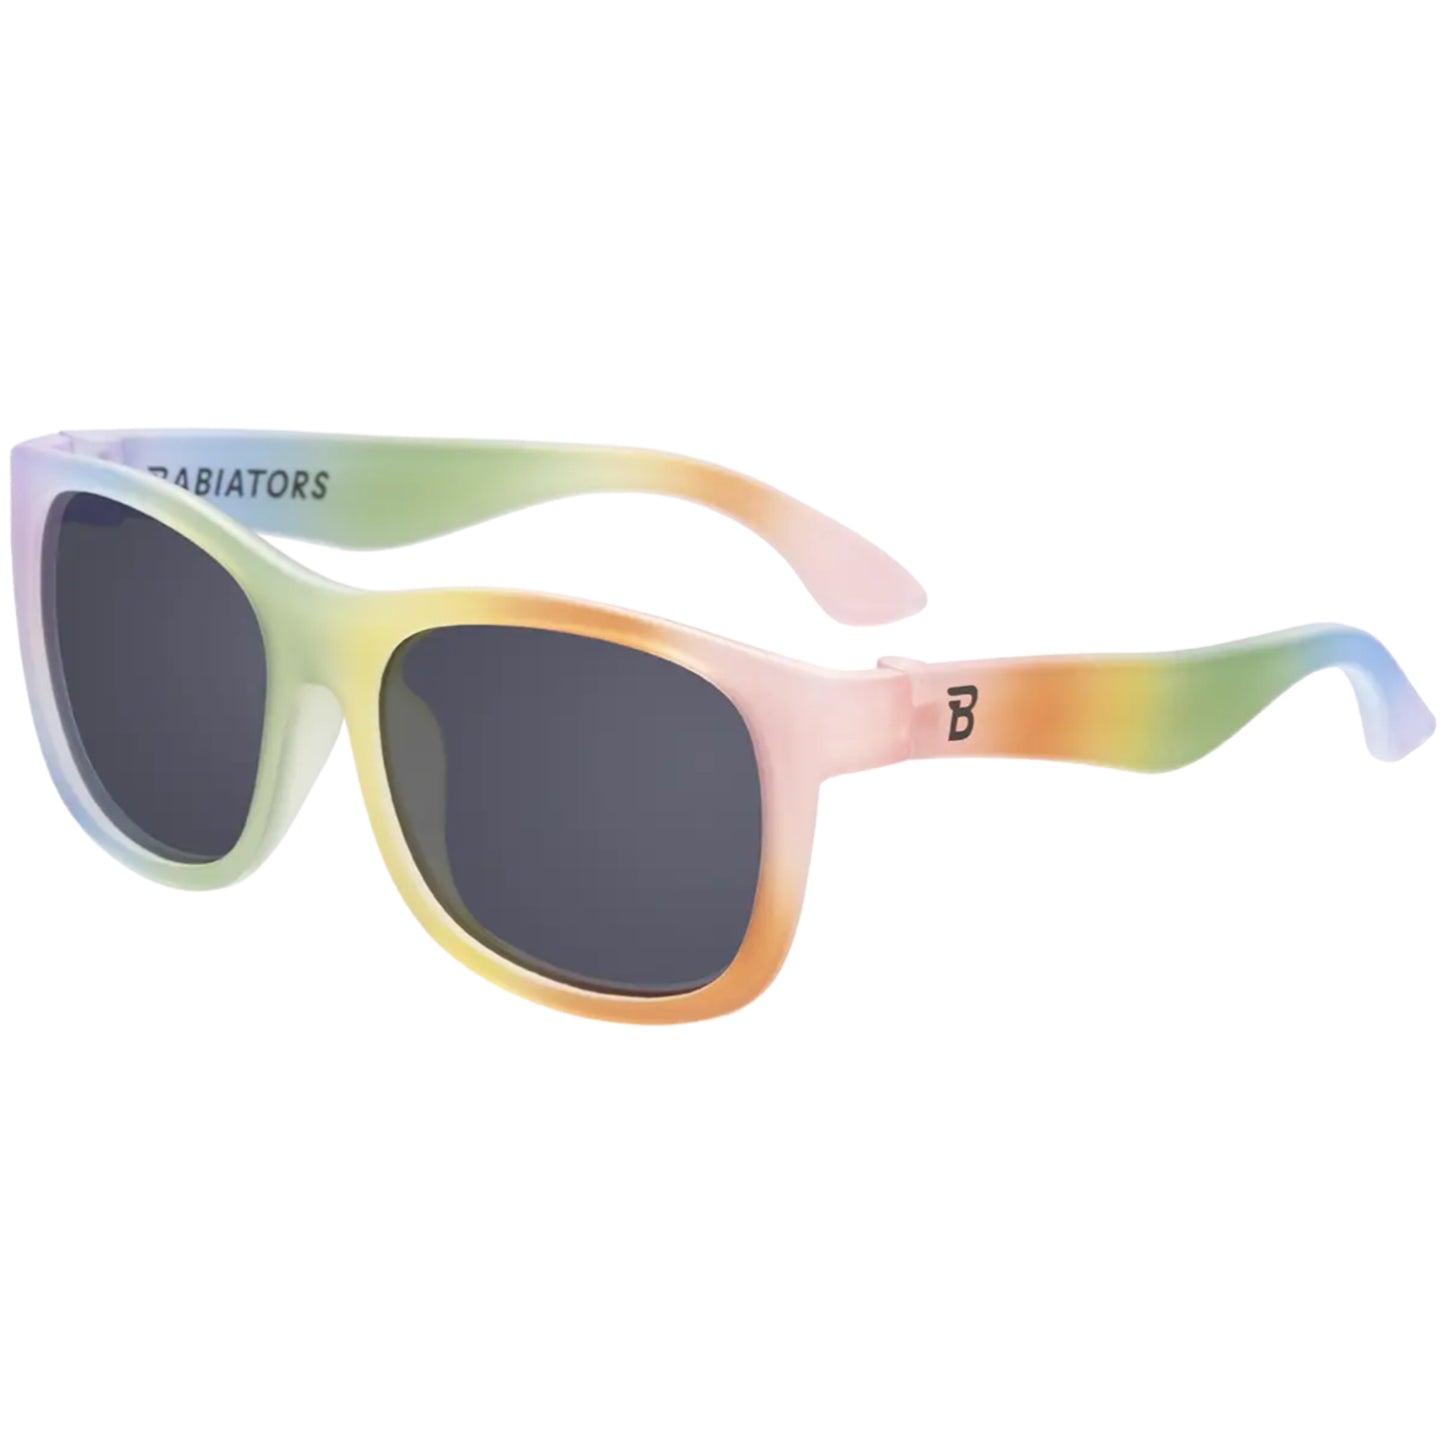 Rad Rainbow Navigator Sunglasses